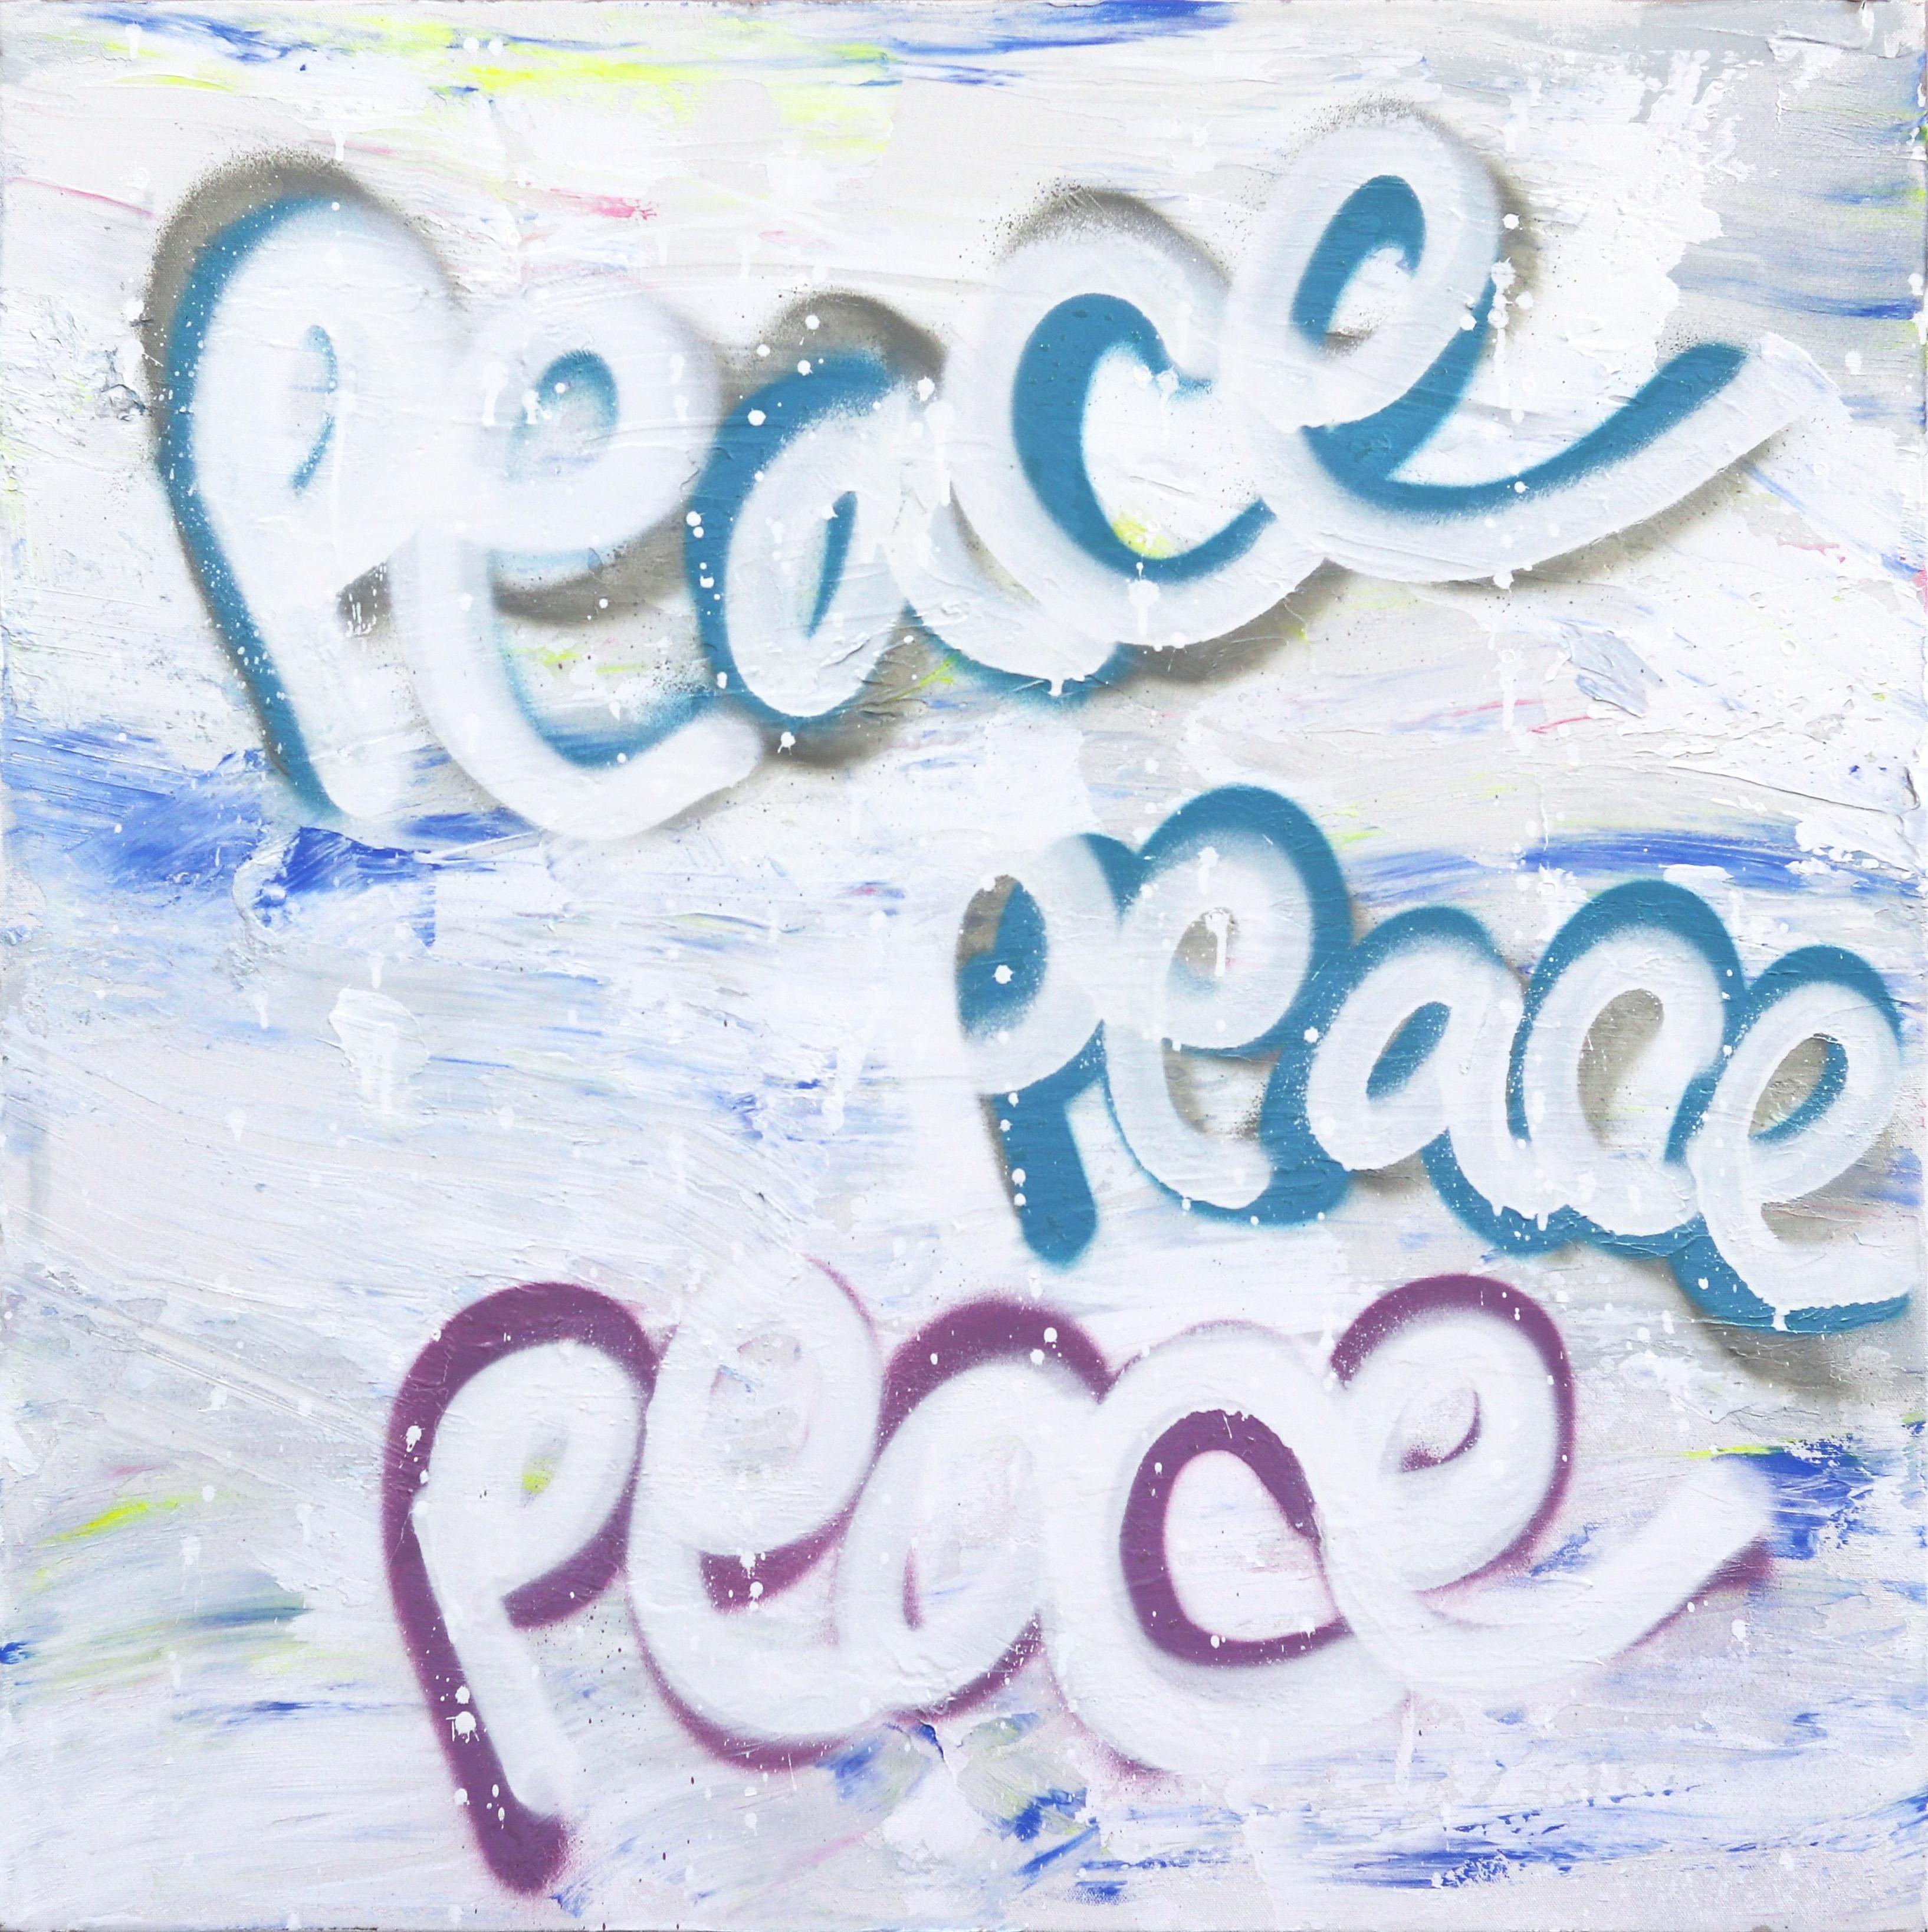 Project Peace